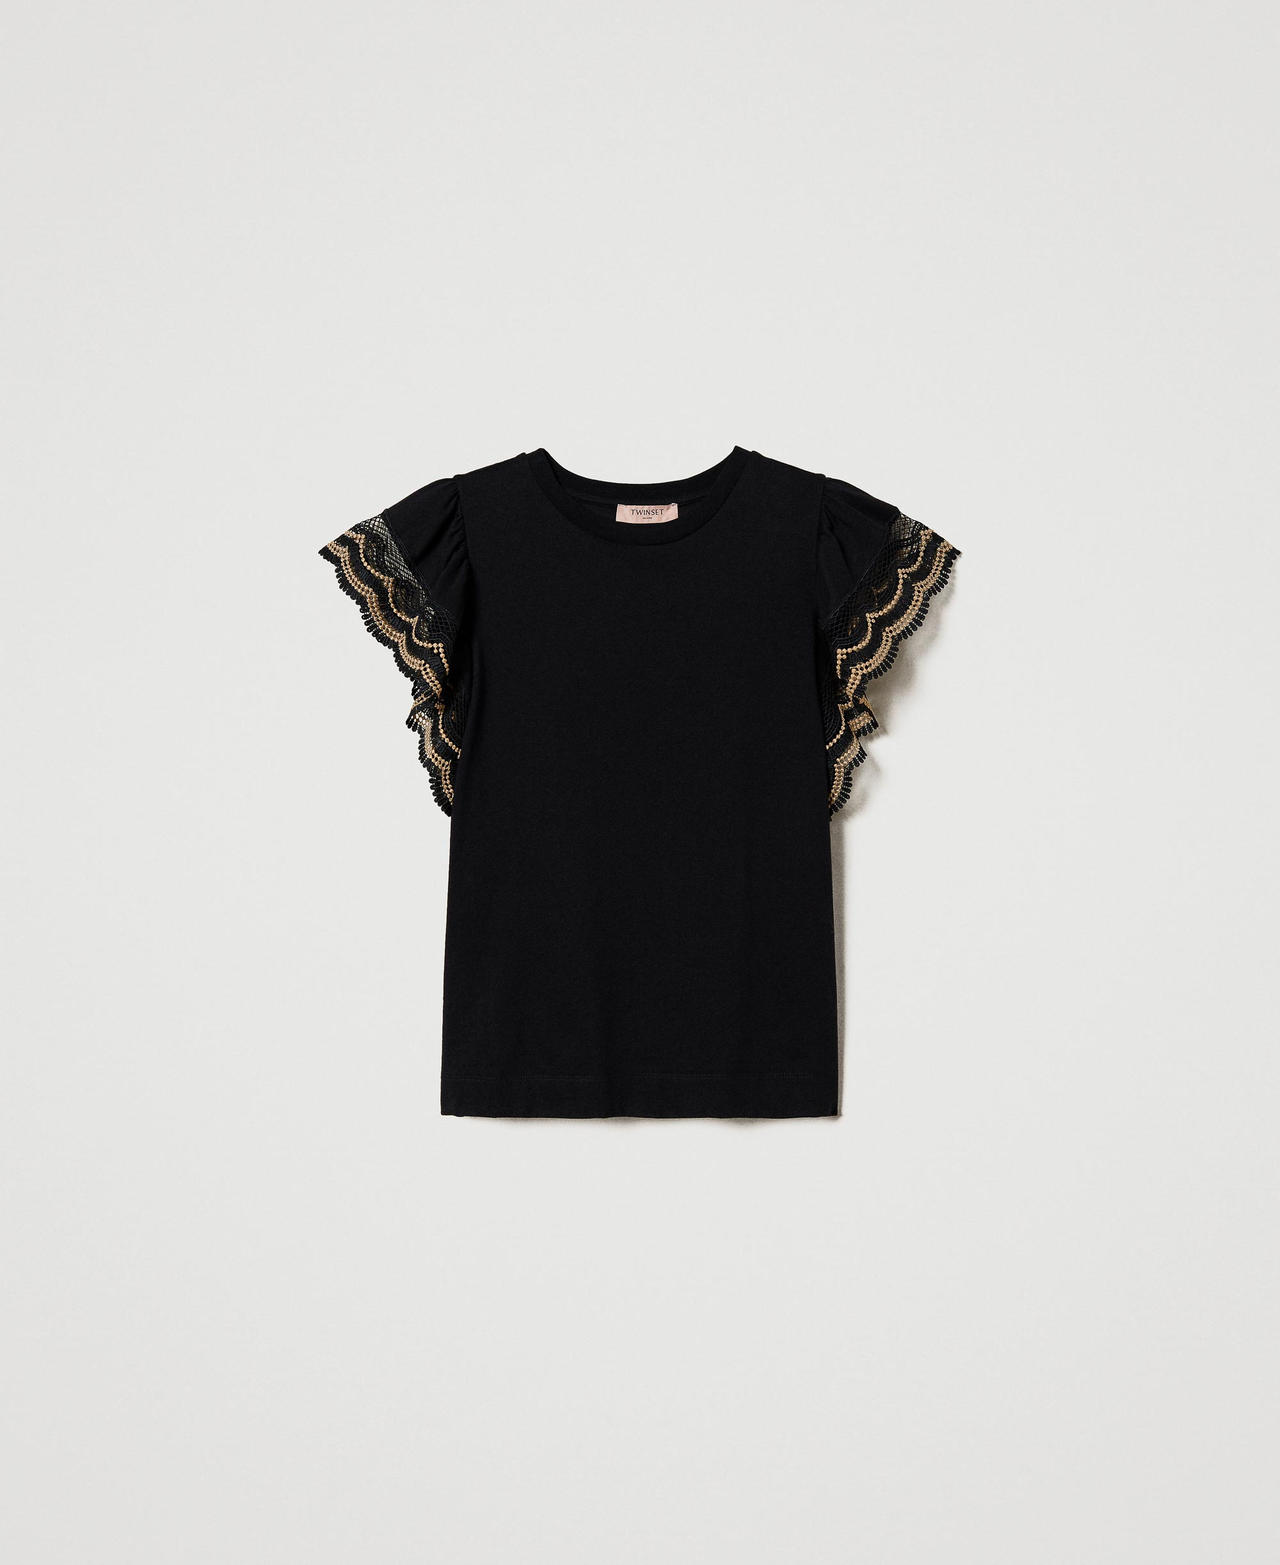 T-shirt avec bords en dentelle macramé bicolore Broderie Noir/Beige Femme 231TT2130-0S